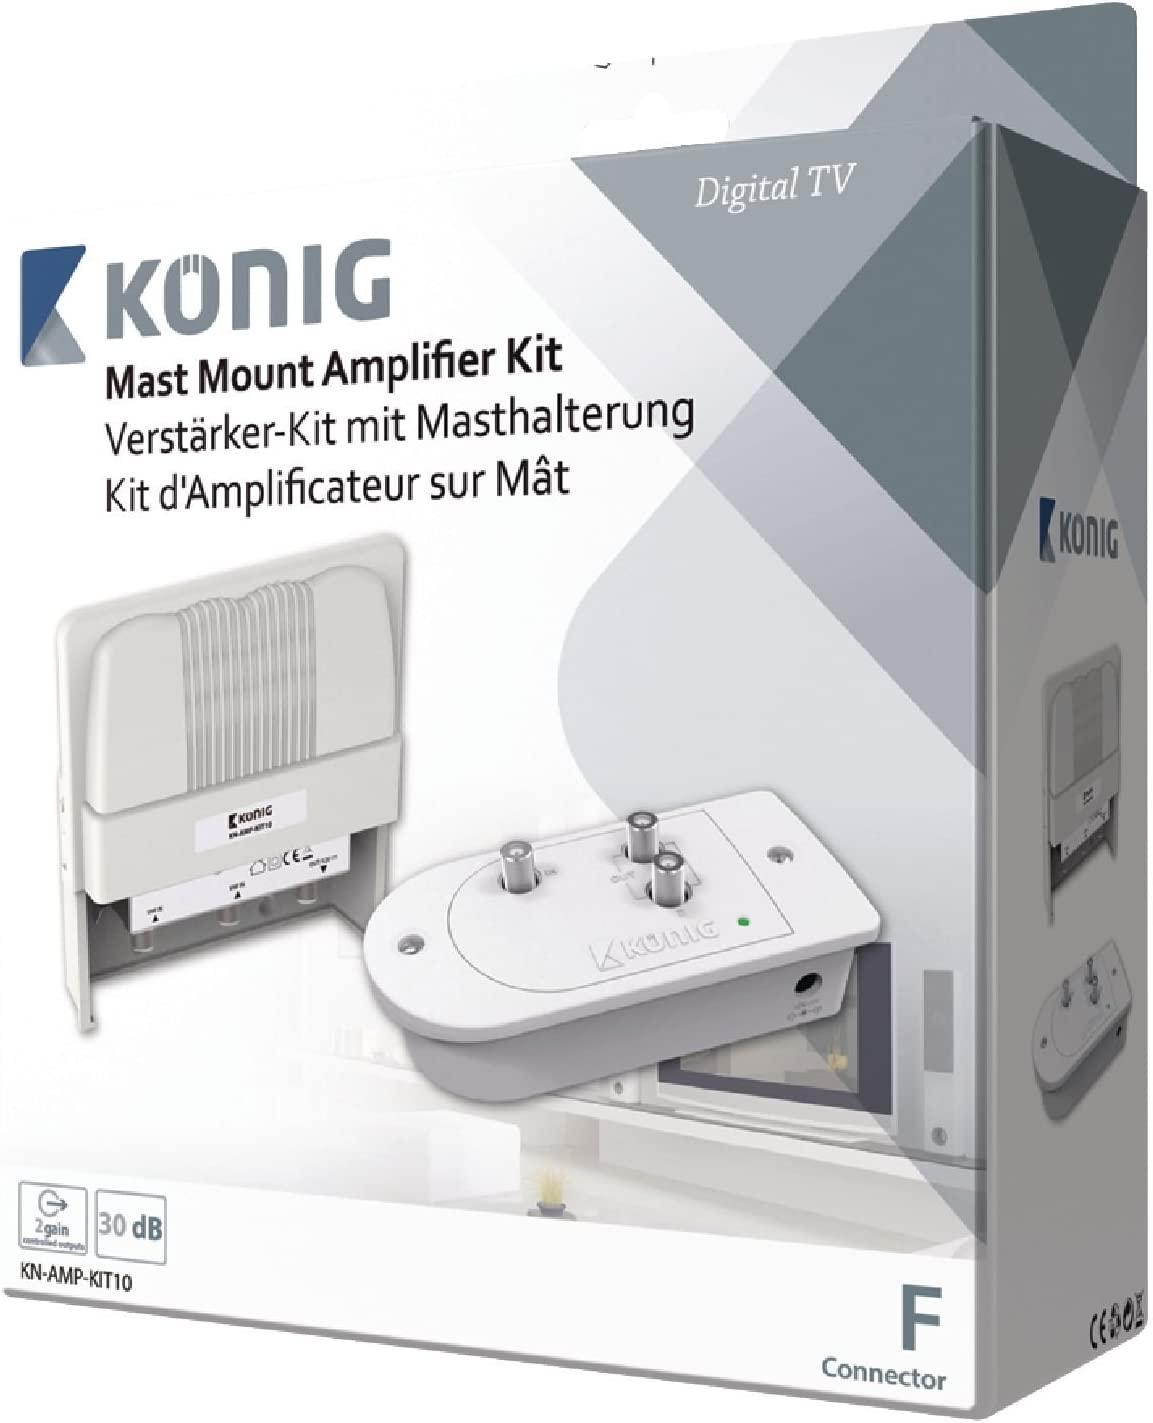 König Amplifier Kit with Mast Mount for UHF/VHF Antenna - GameStore.mt | Powered by Flutisat